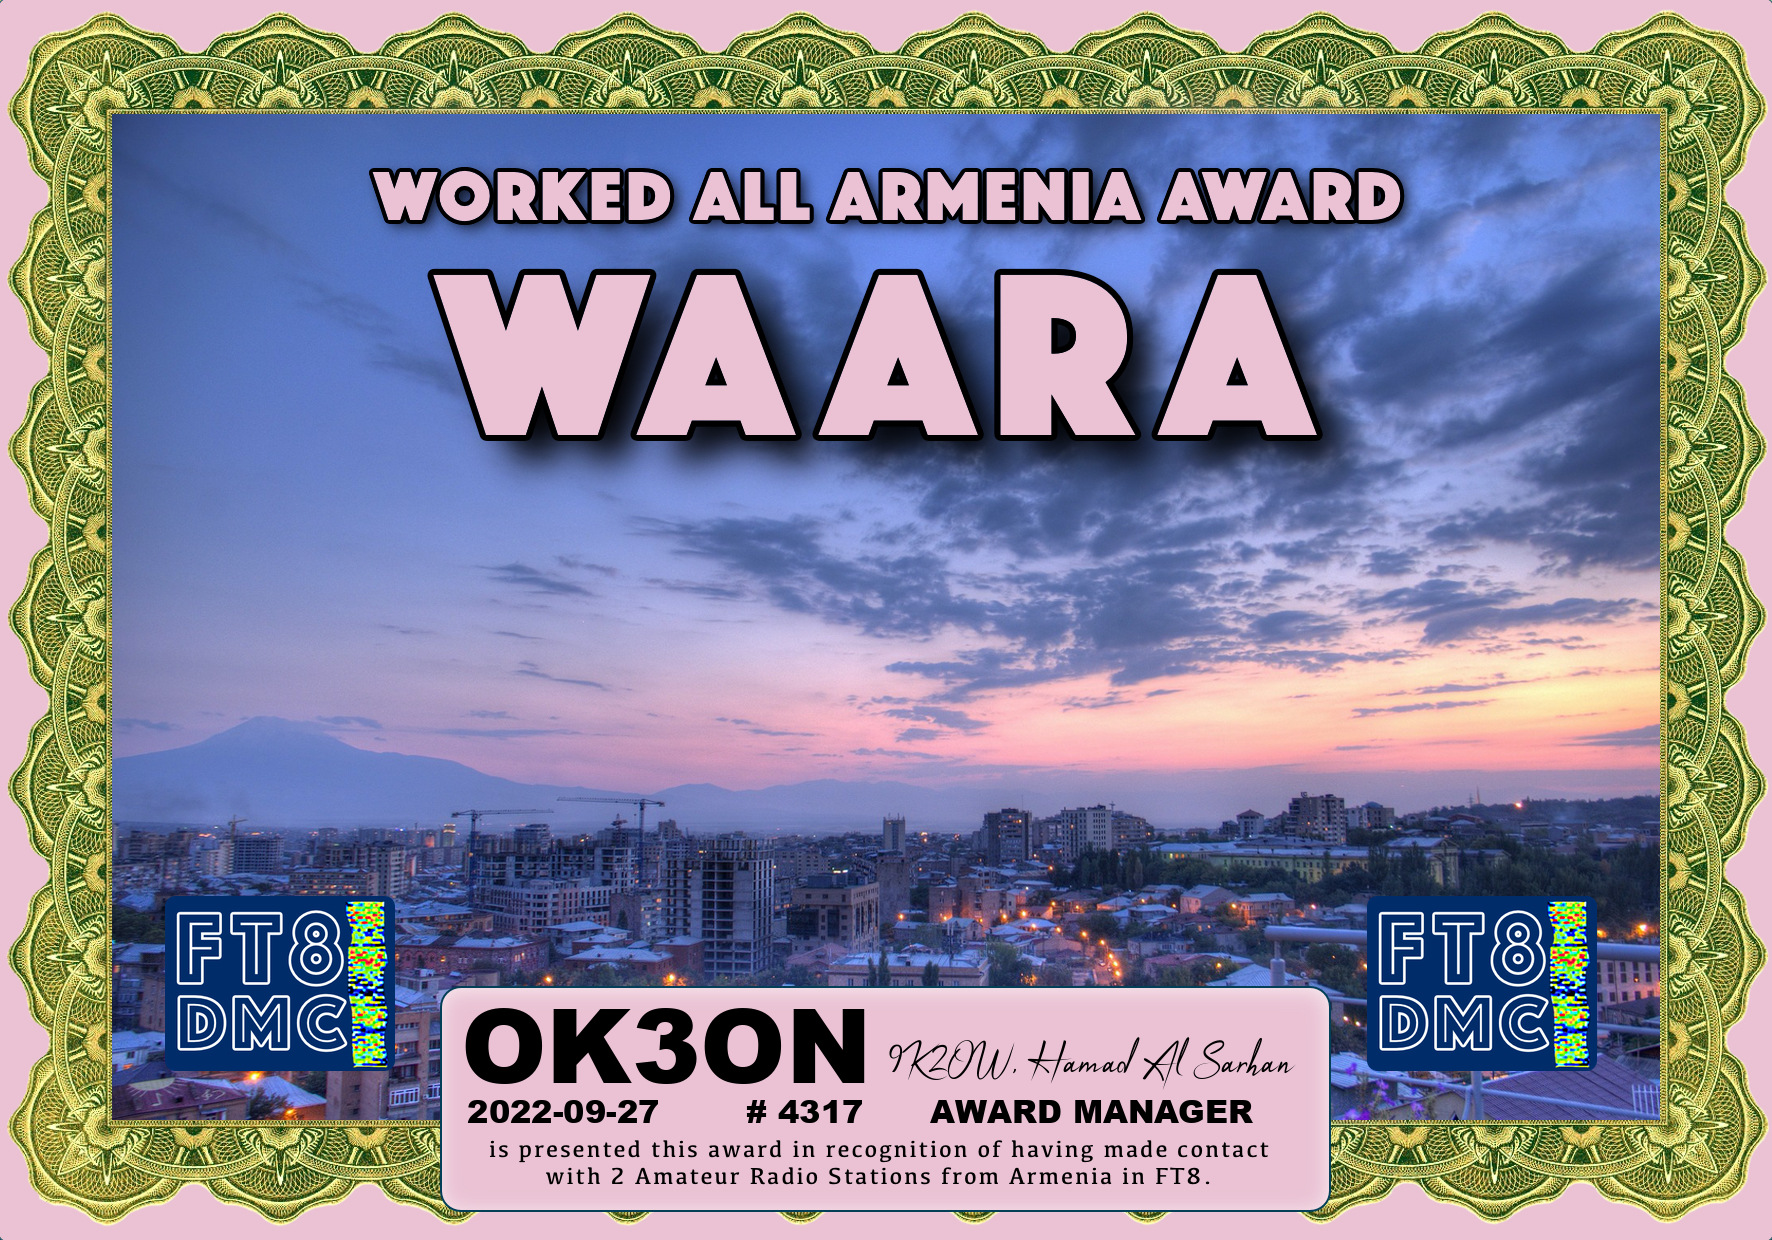 awards/OK3ON-WAARA-WAARA_FT8DMC.jpg